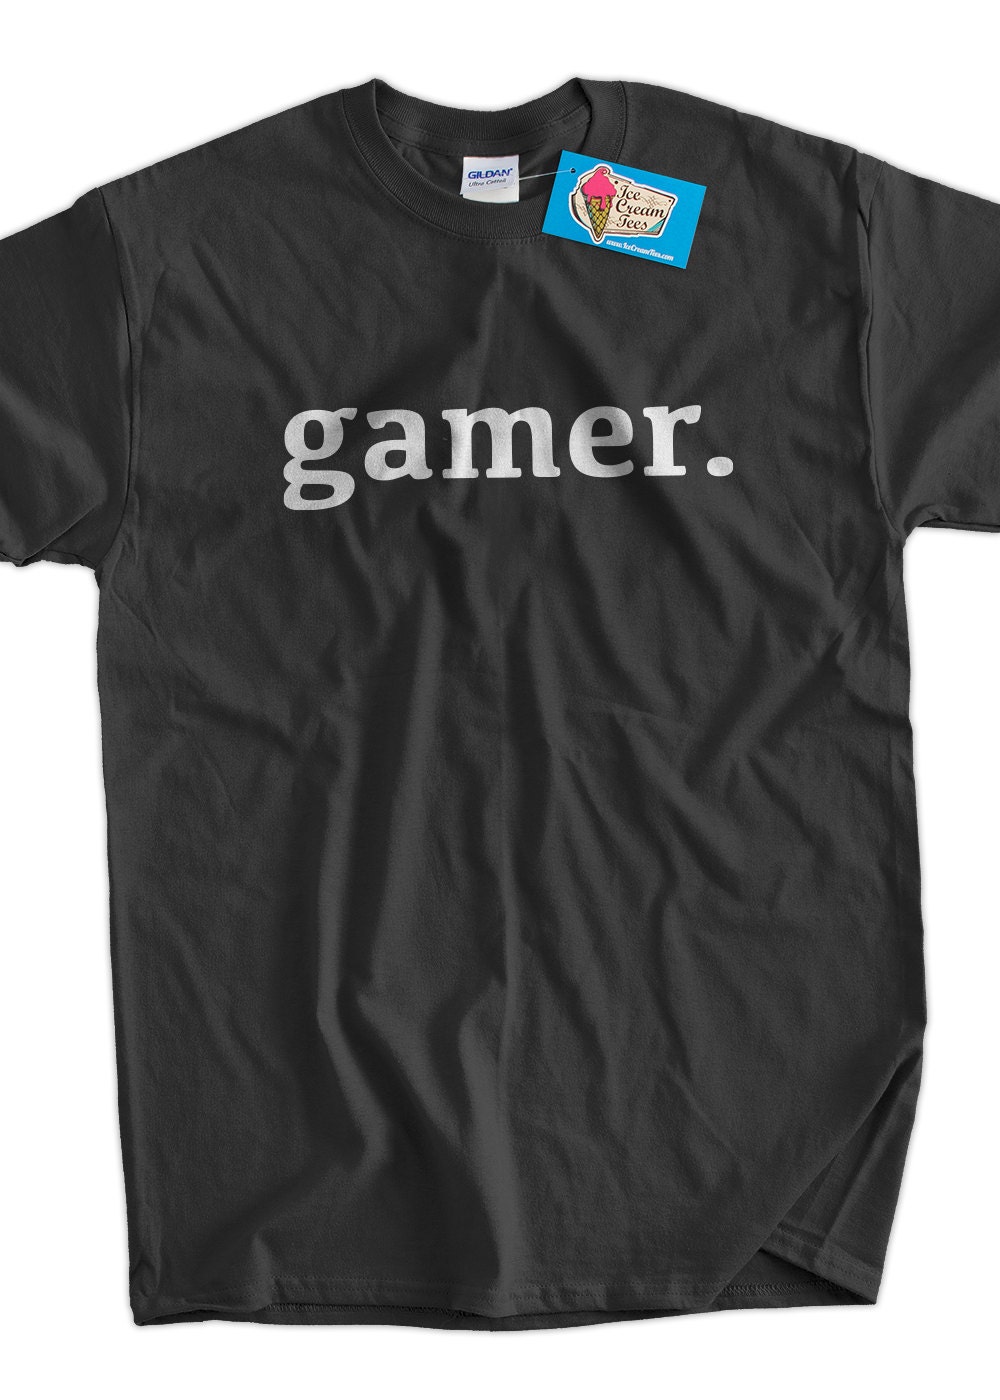 Video Games Shirt Gamer T-Shirt Funny Arcade Games Computer